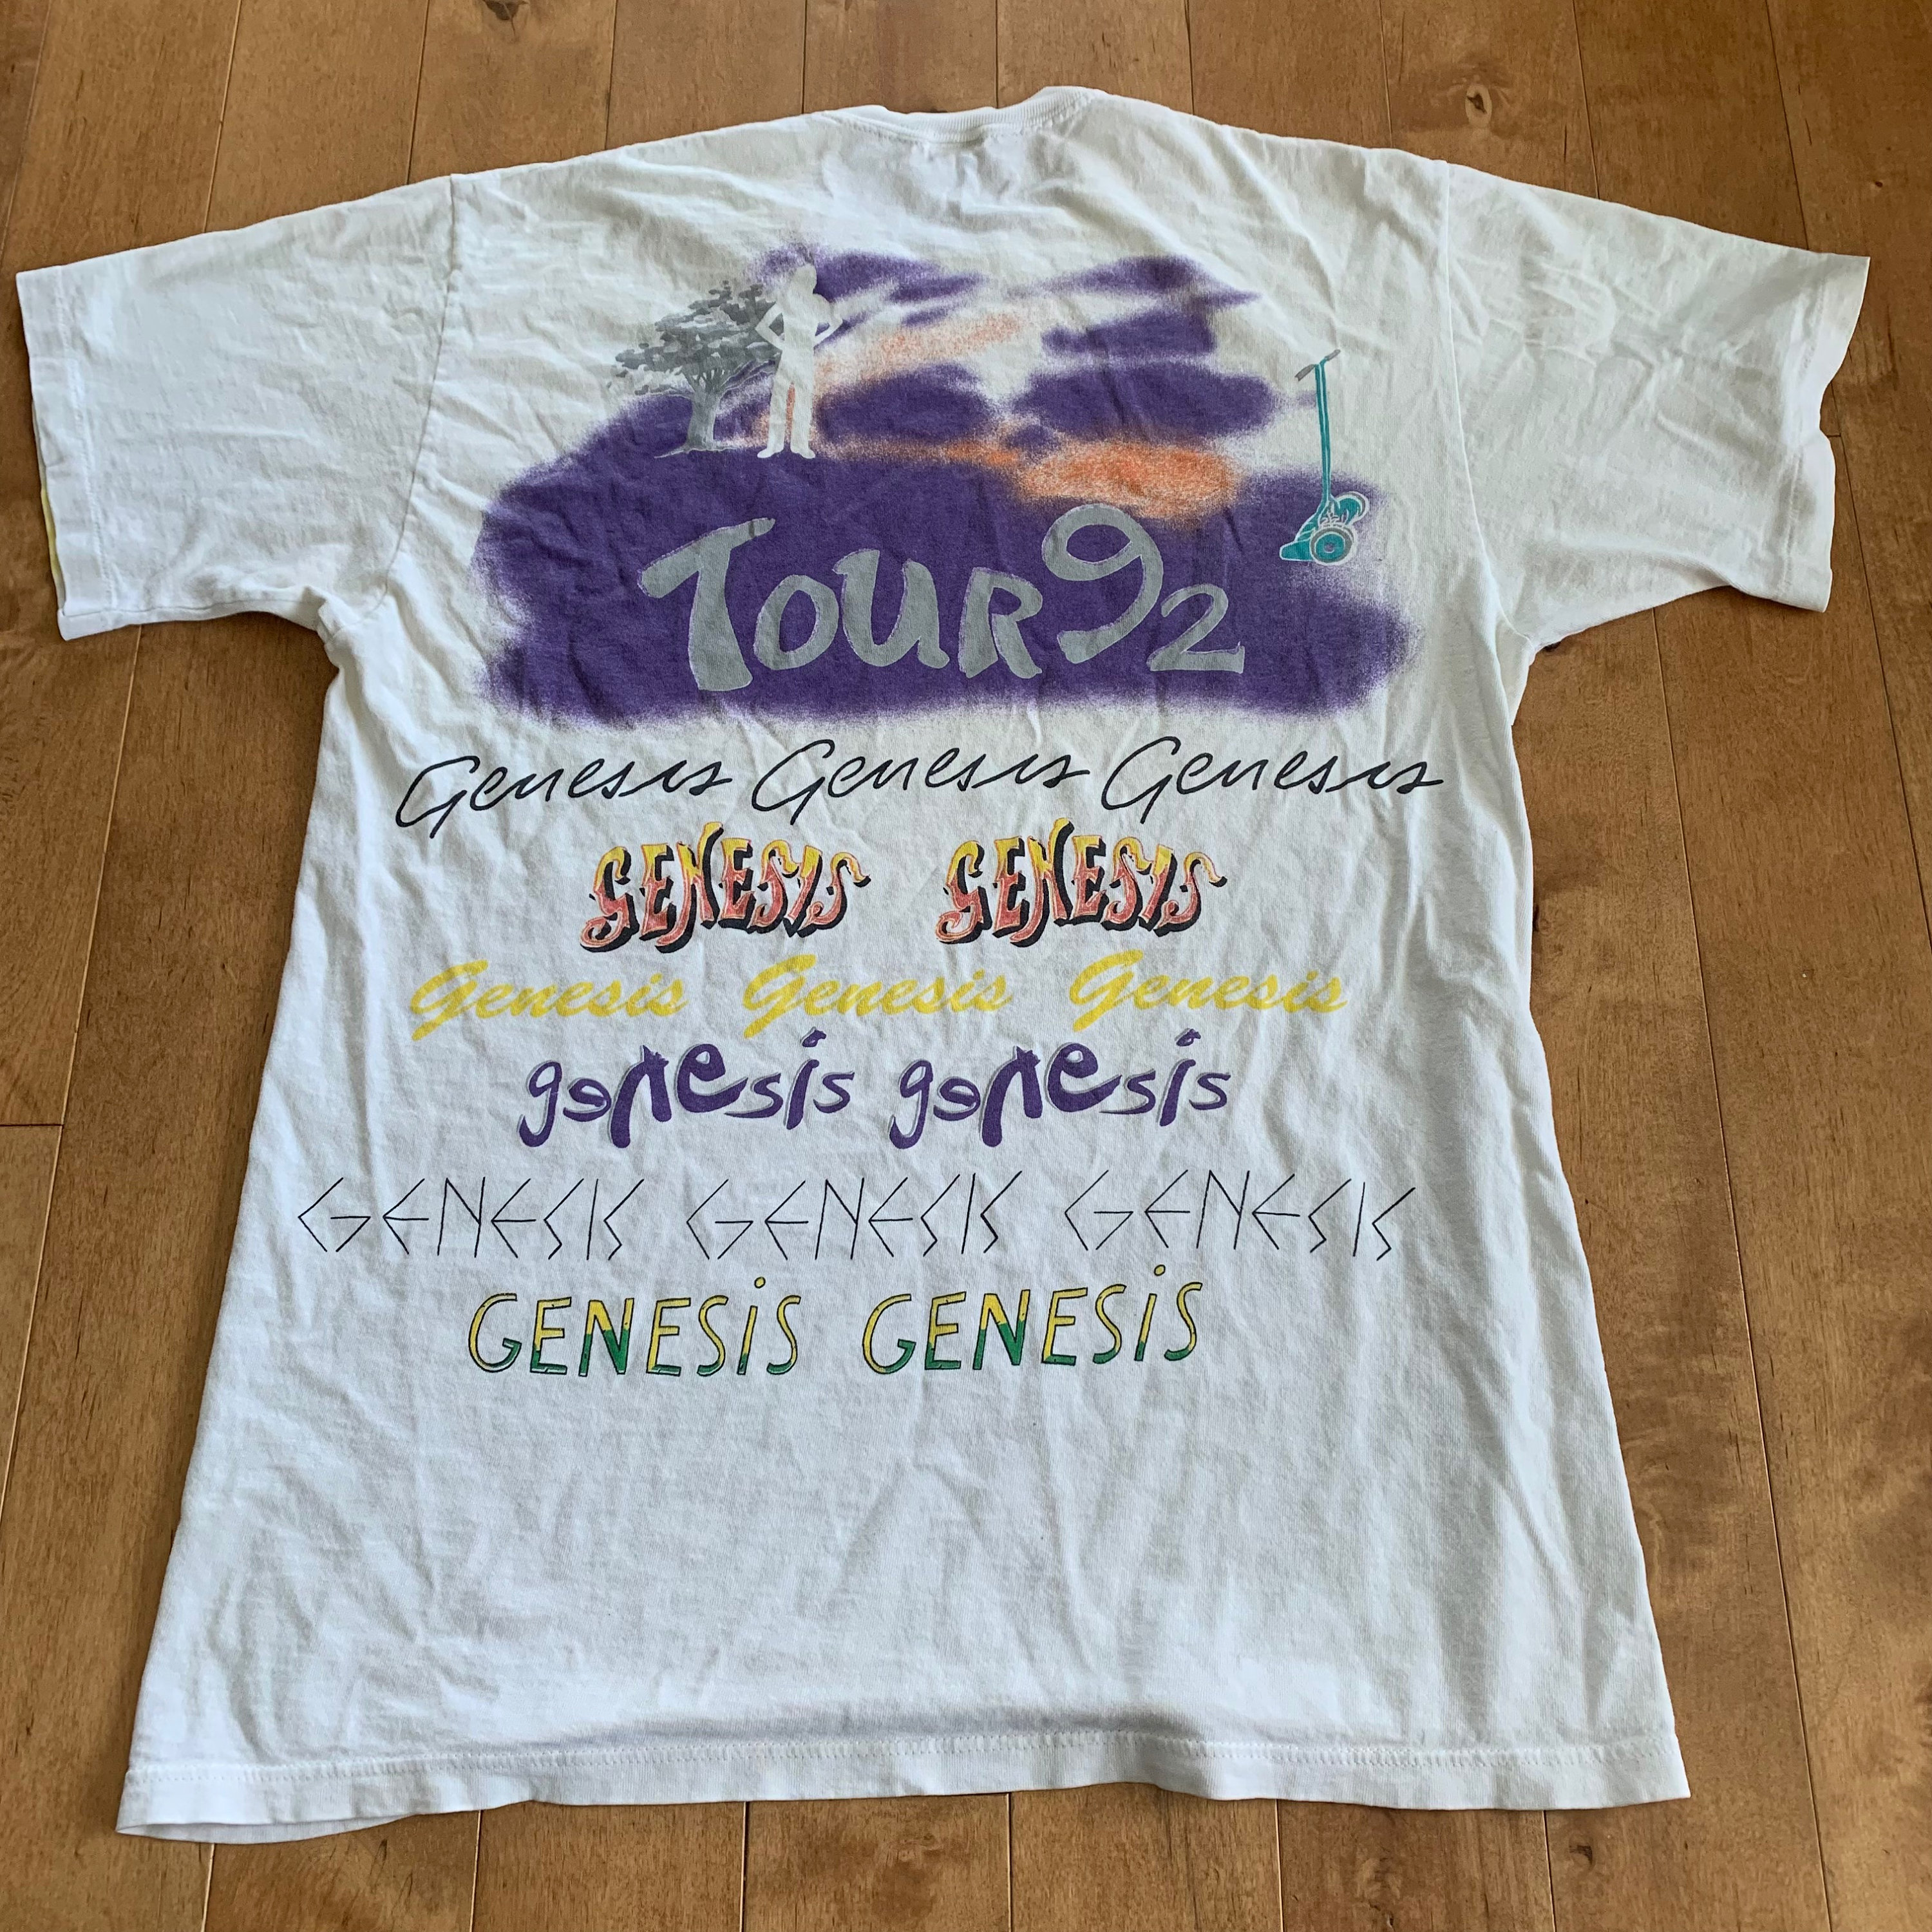 Vintage 1992 GENESIS Open Air original merchandise t-shirt